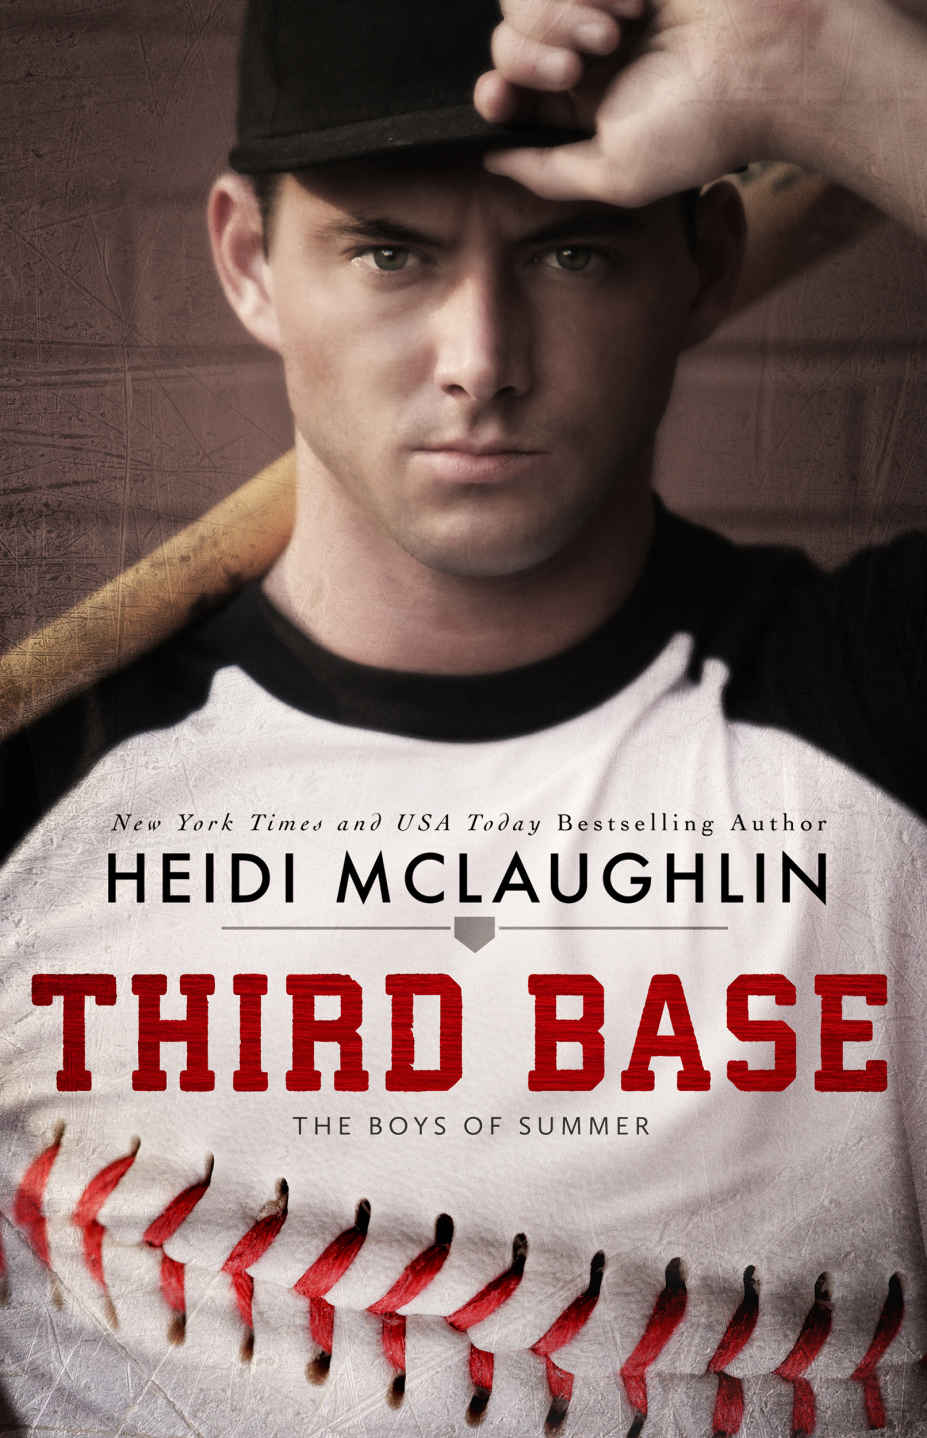 Third Base (The Boys of Summer Book 1) by Heidi McLaughlin